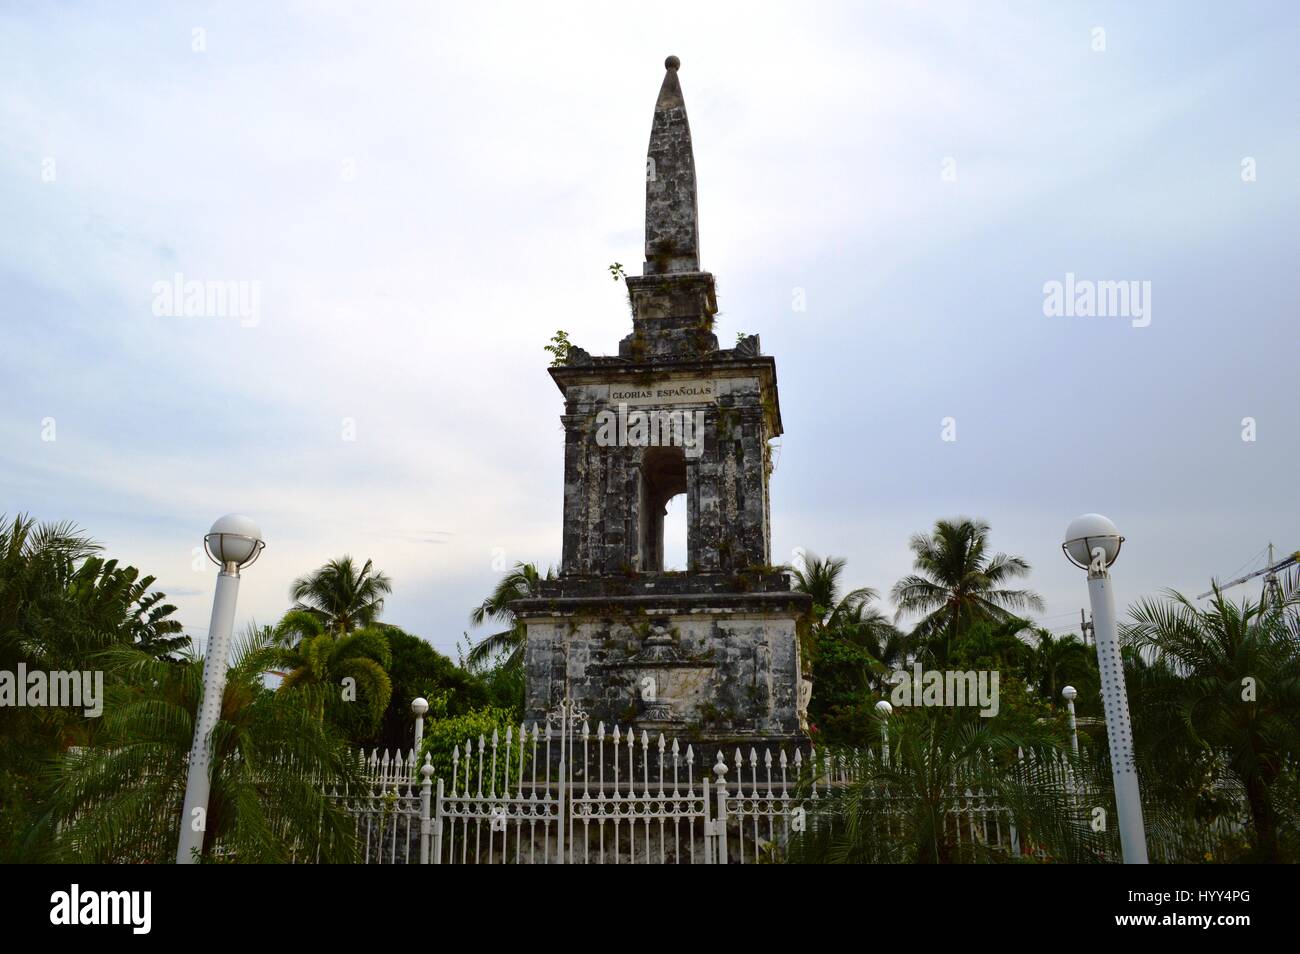 The Magellan's Marker at the Mactan Shrine in the island of Mactan, Lap-Lapu City, Cebu, Philippines, in South East Asia. Stock Photo